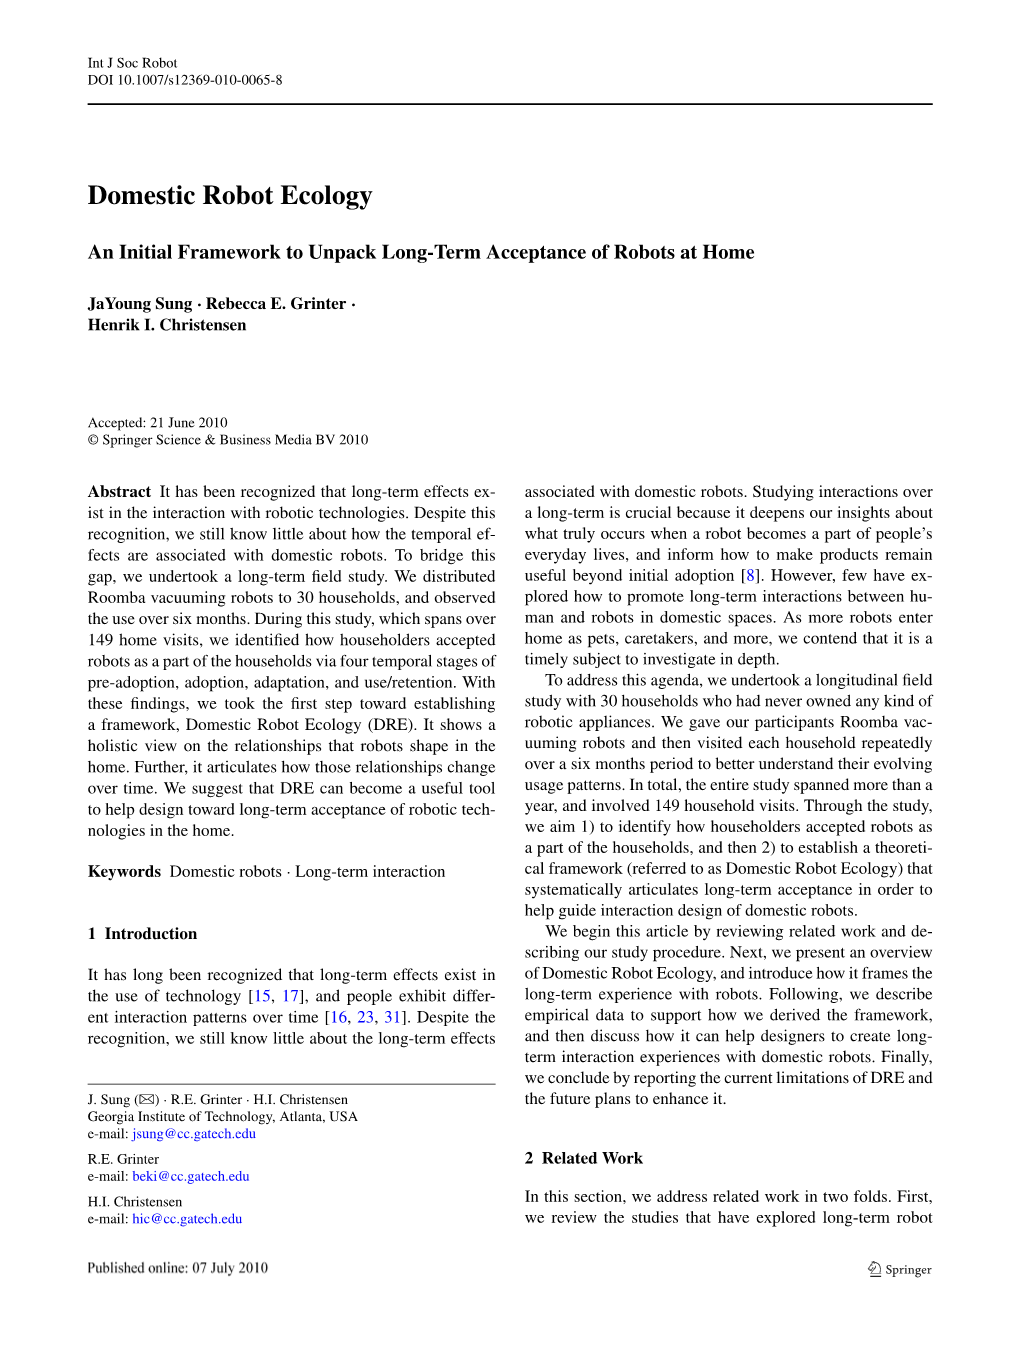 Domestic Robot Ecology